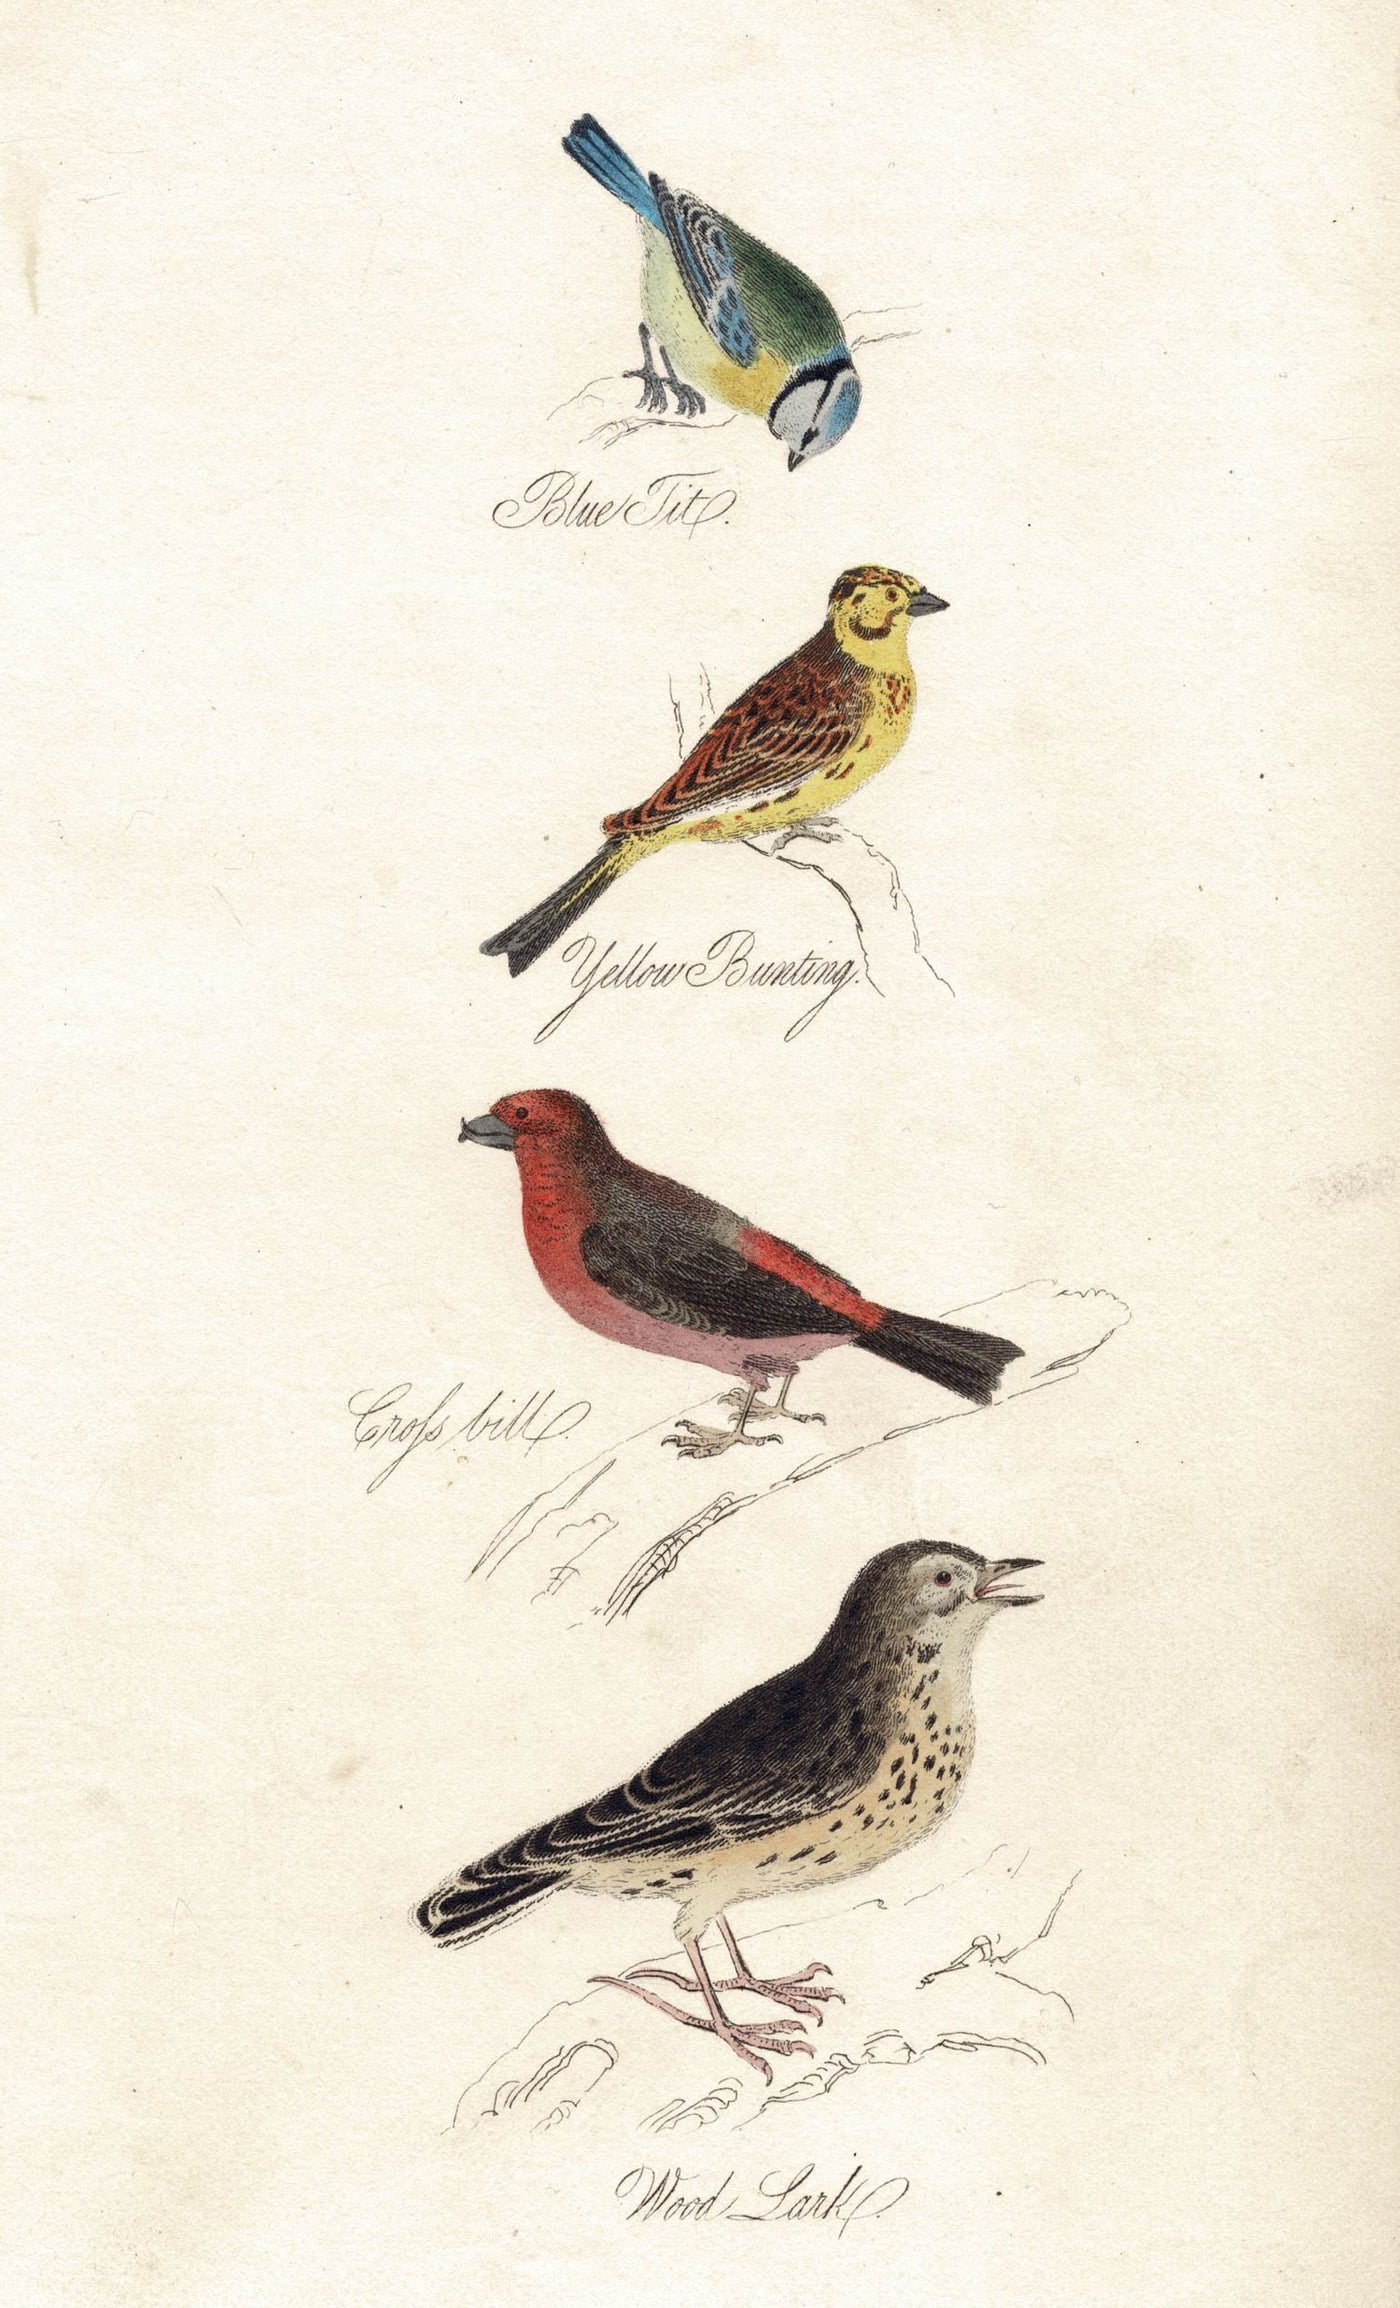 Blue Tit, Yellow Bunting, Cross Bill and Wood Lark antique print 1834